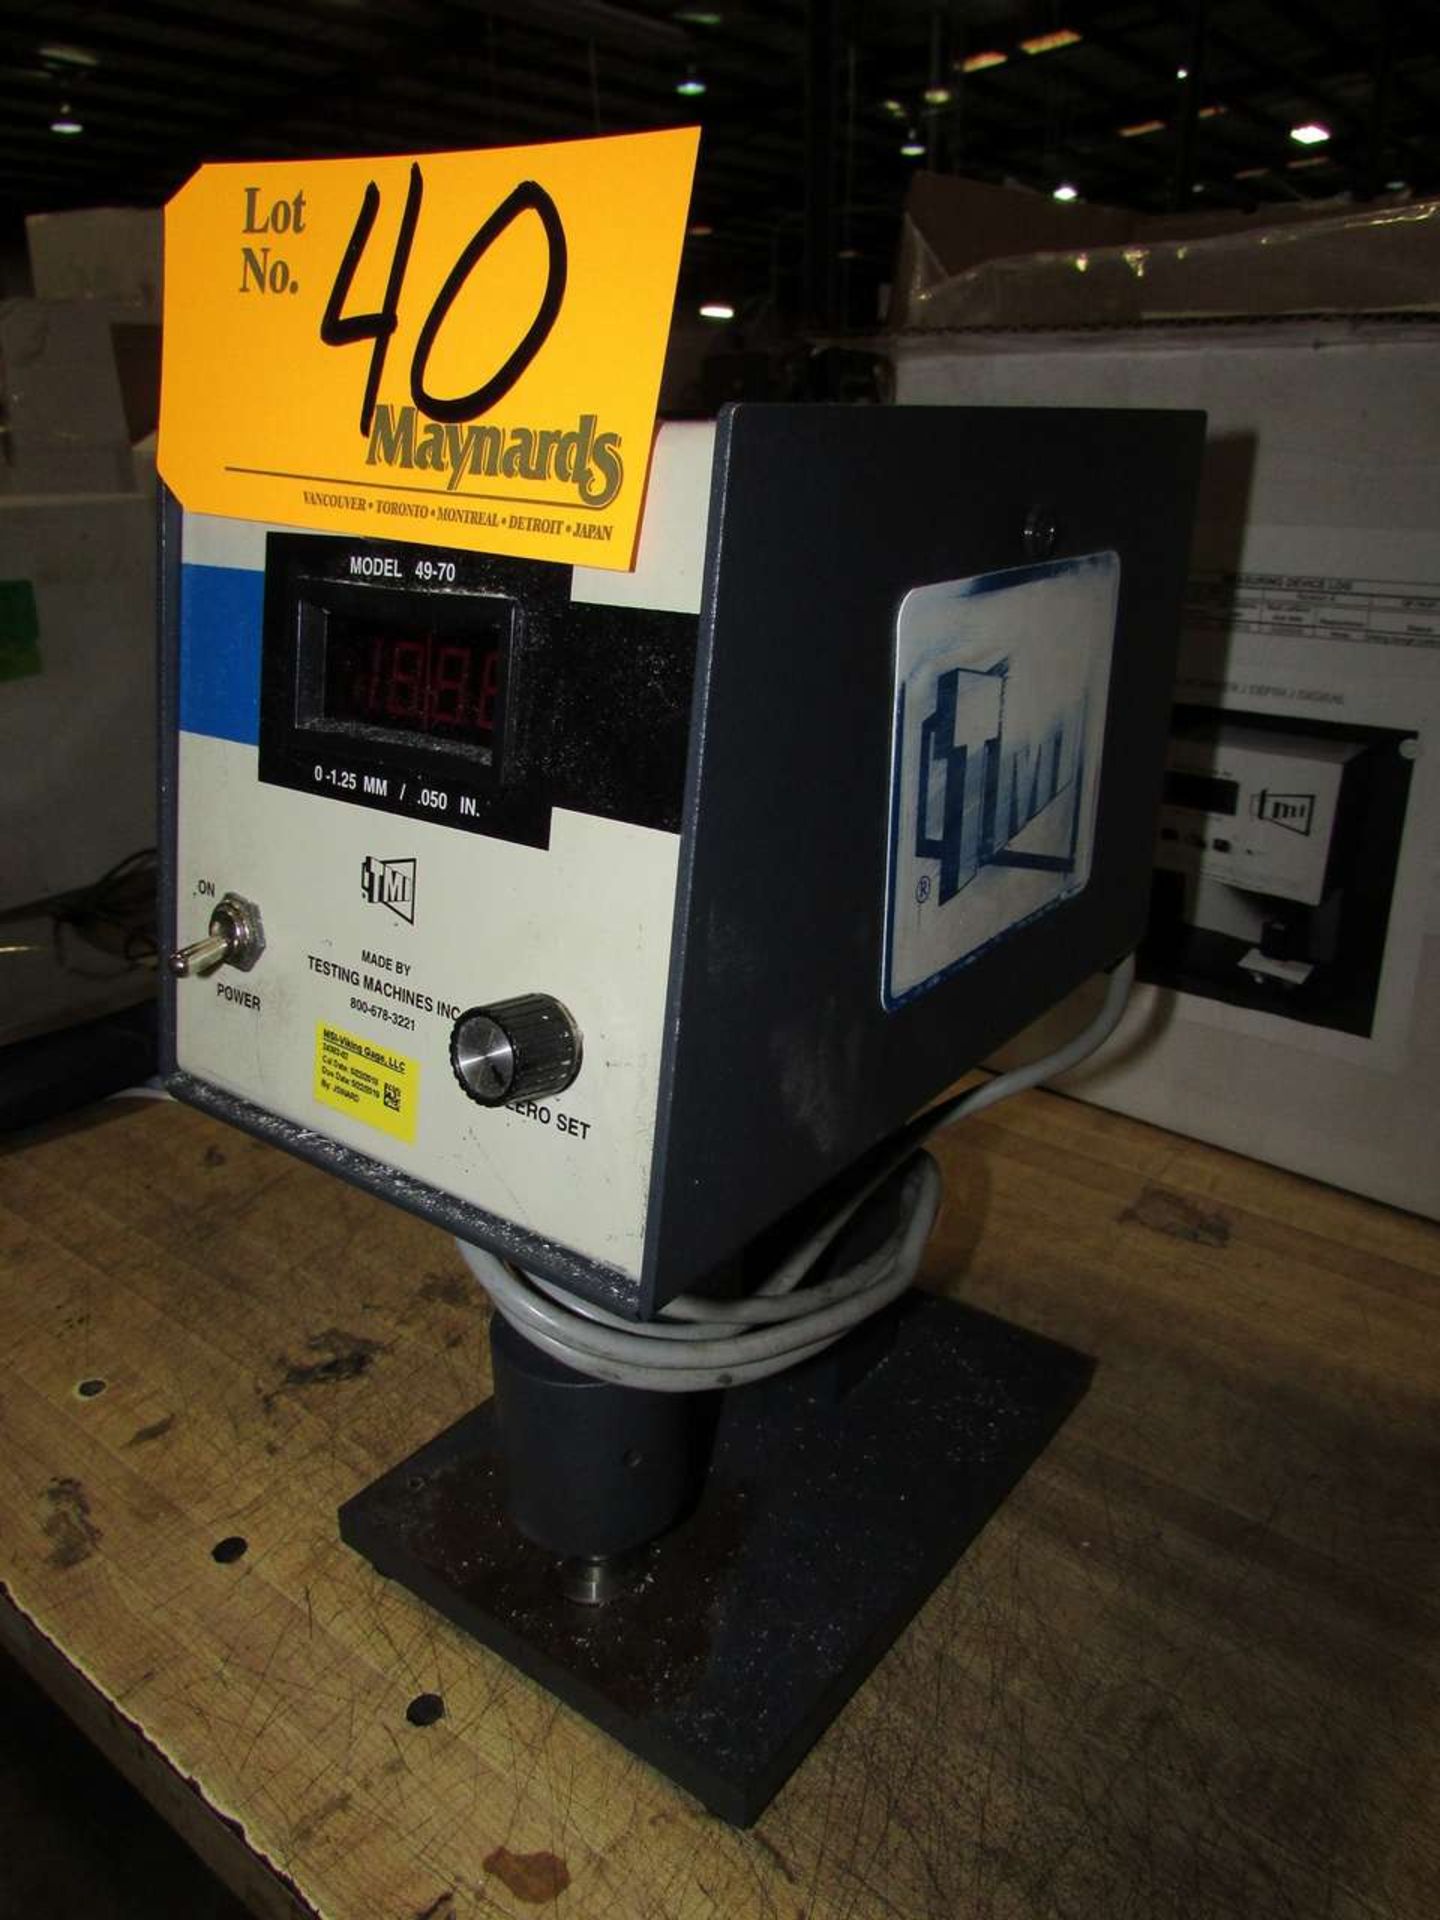 Testing Machines Inc. 49-70 Digital Micrometers